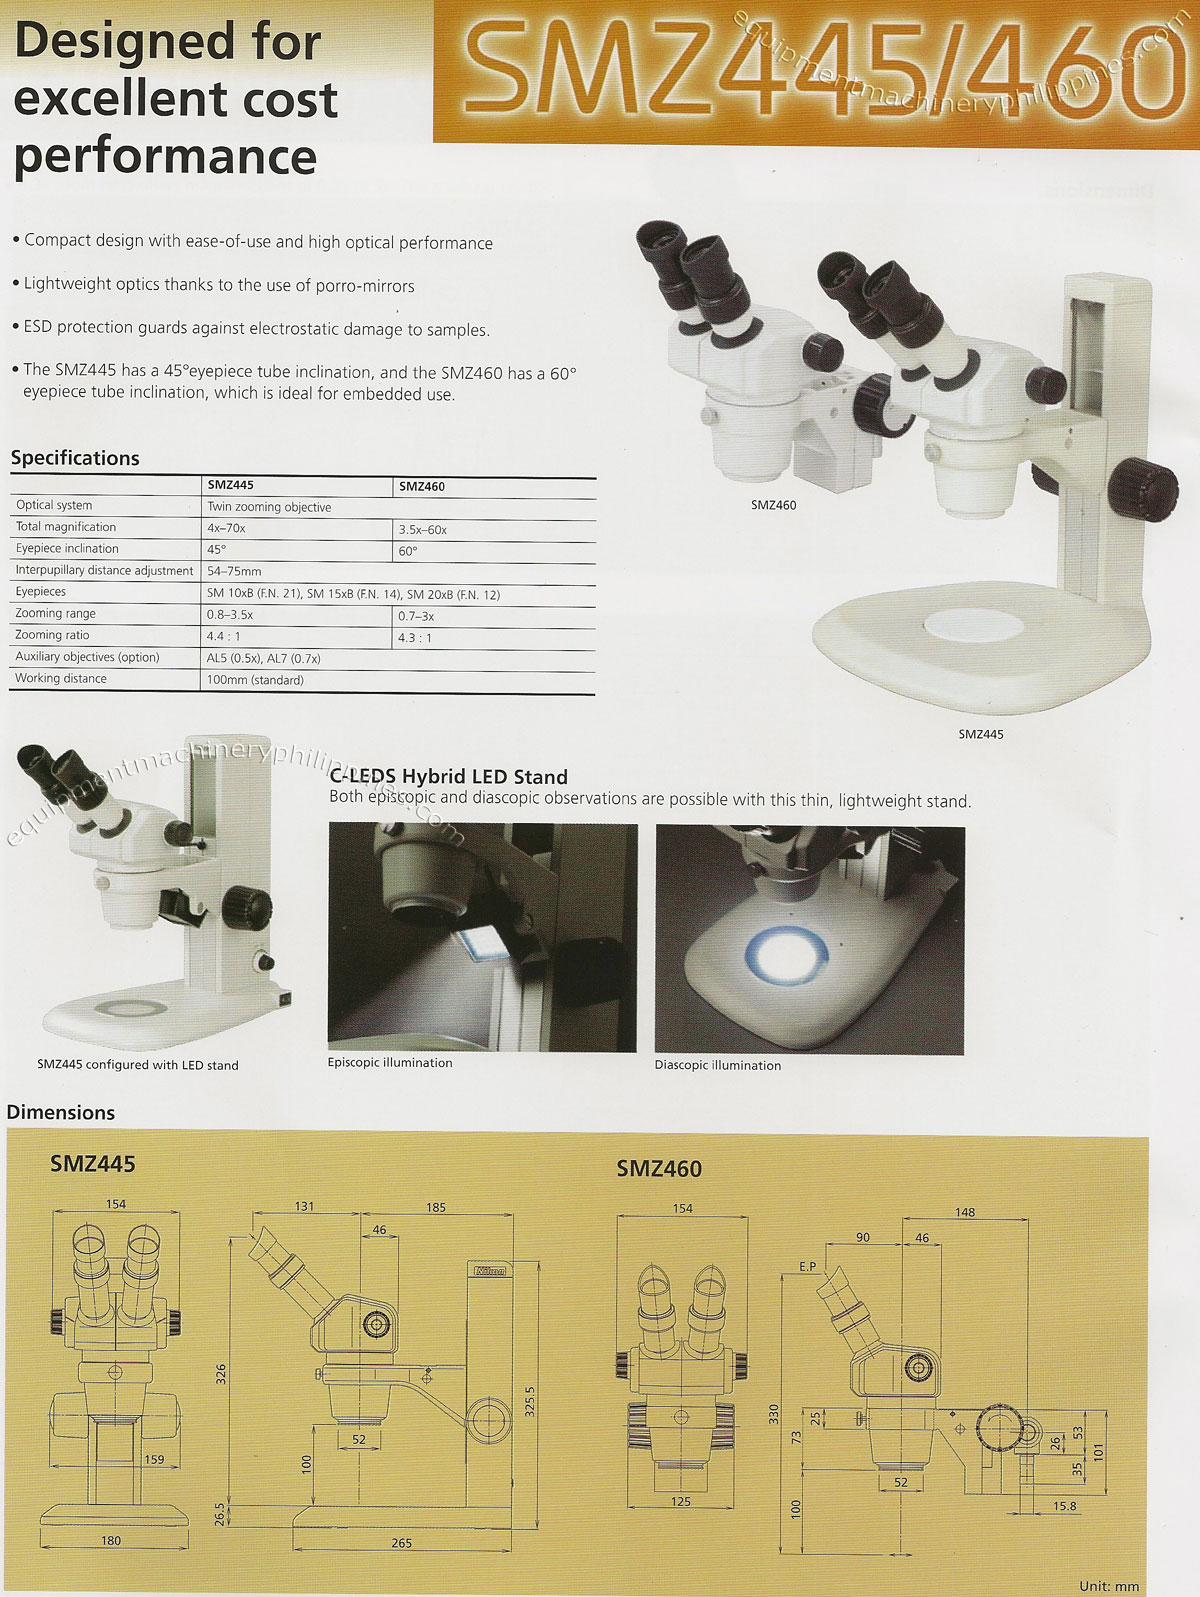 Nikon Stereoscopic Microscope - SMZ445/460